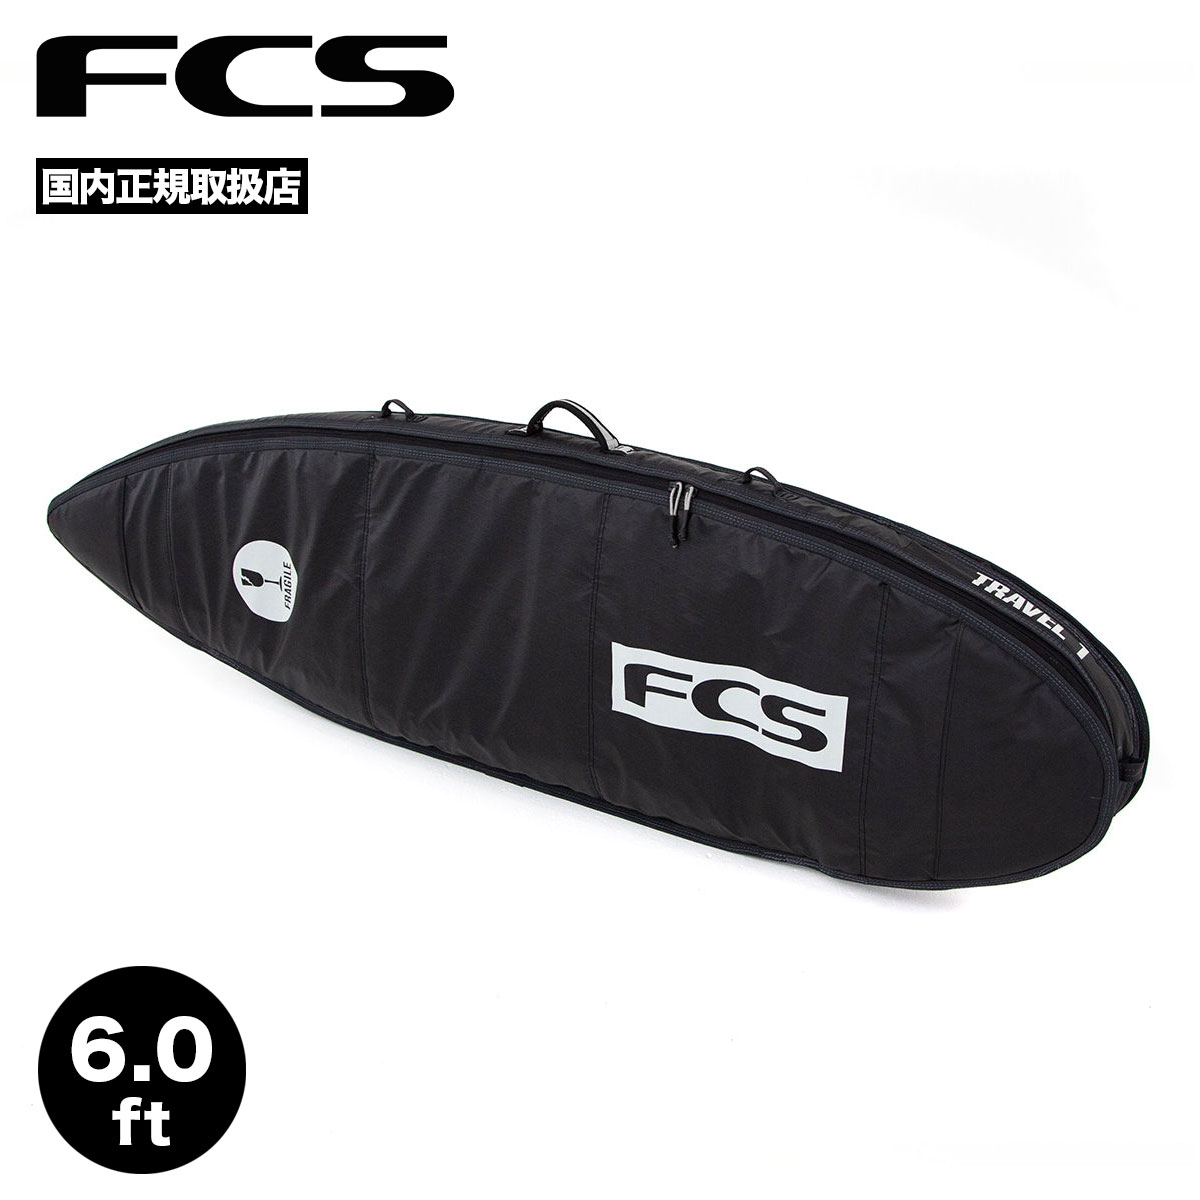 FCS ハードケース TRAVEL 1 [6'0] - サーフィン